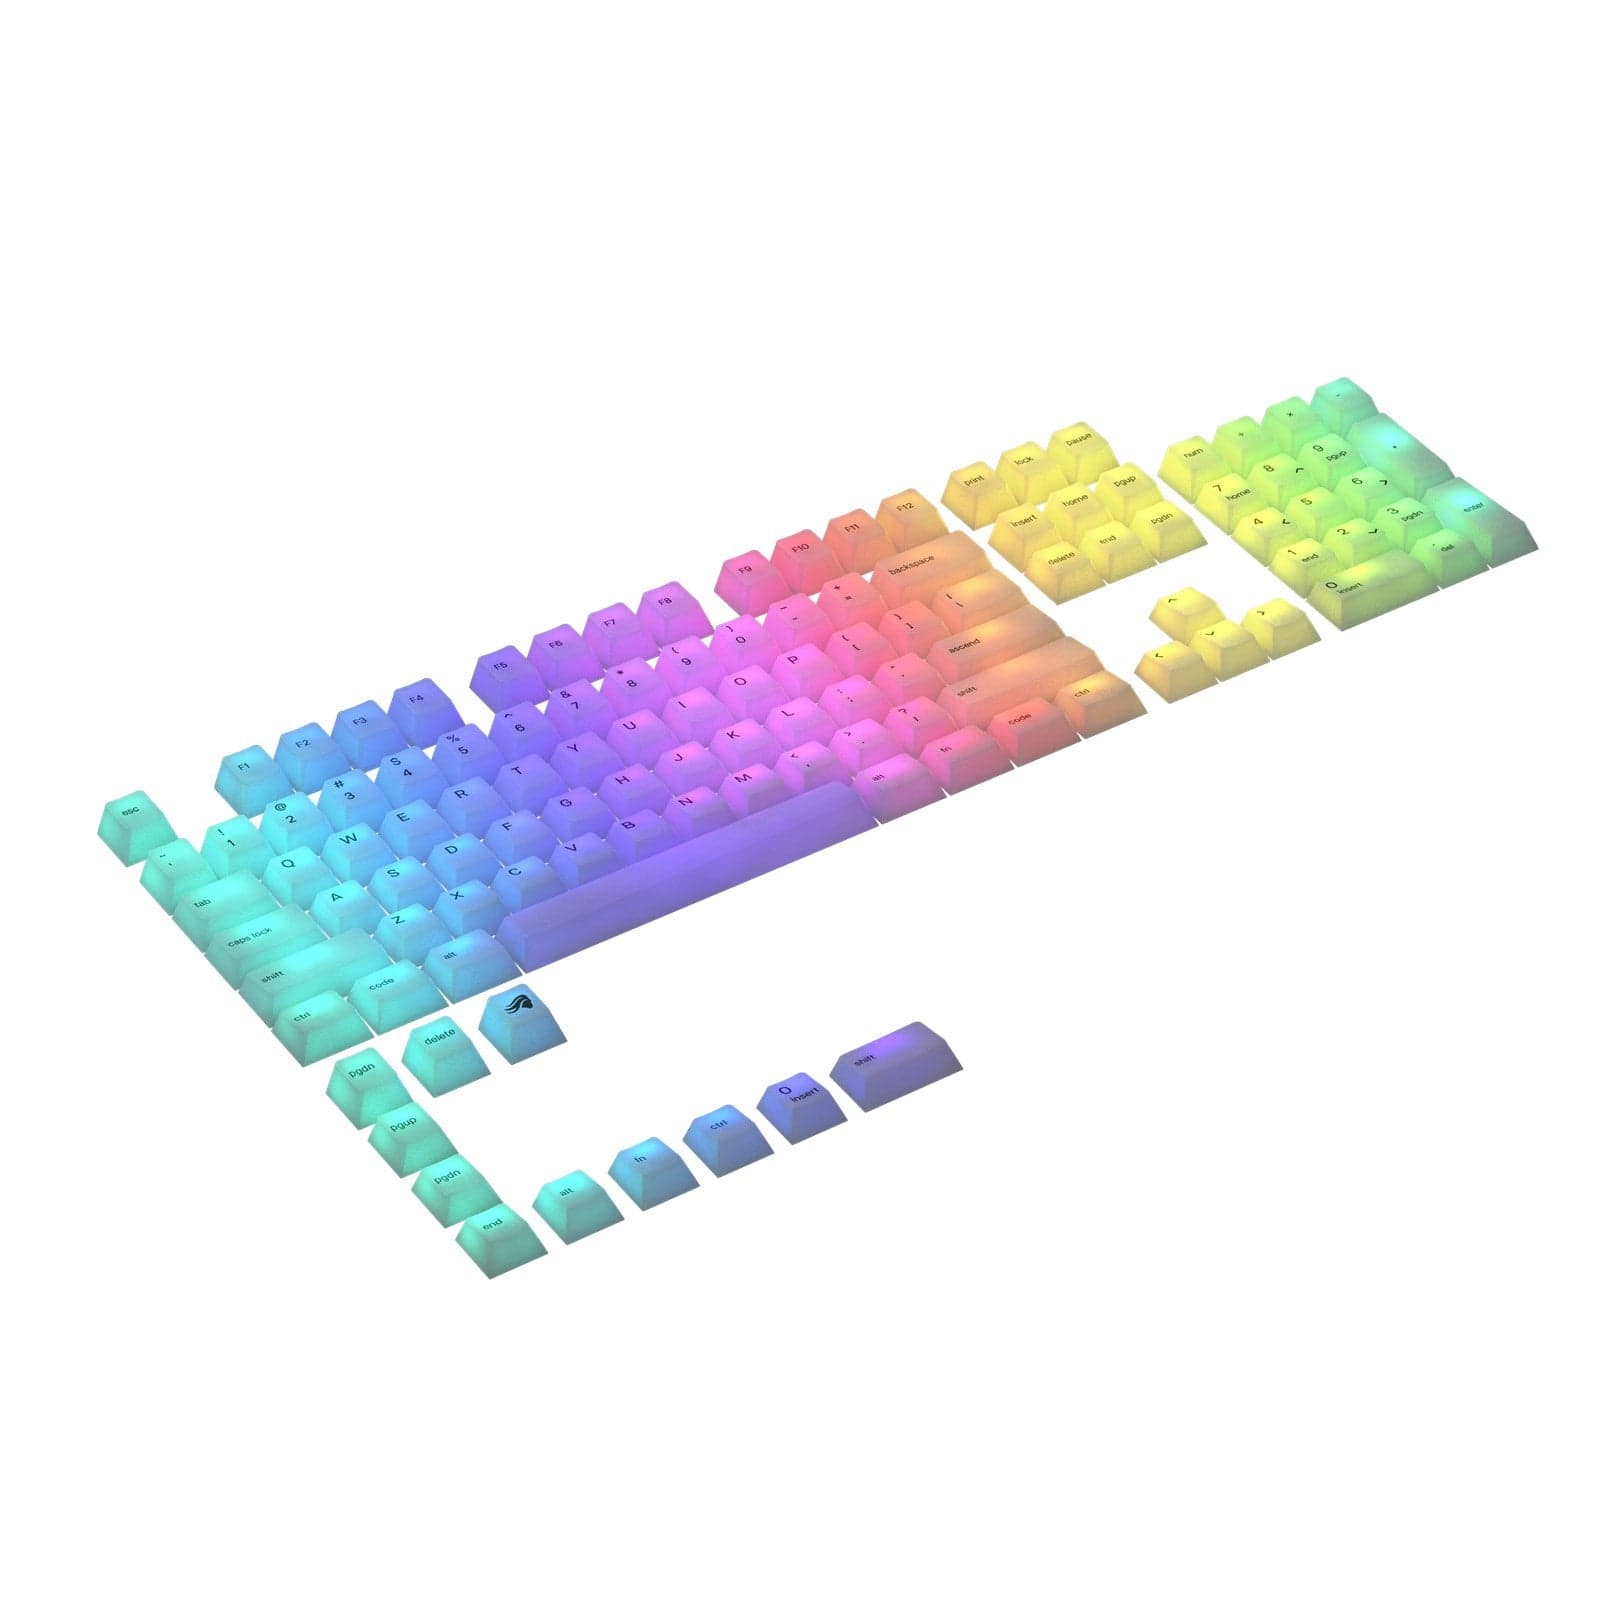 Bộ Keycap trong suốt Glorious Polychroma RGB - 115 phím